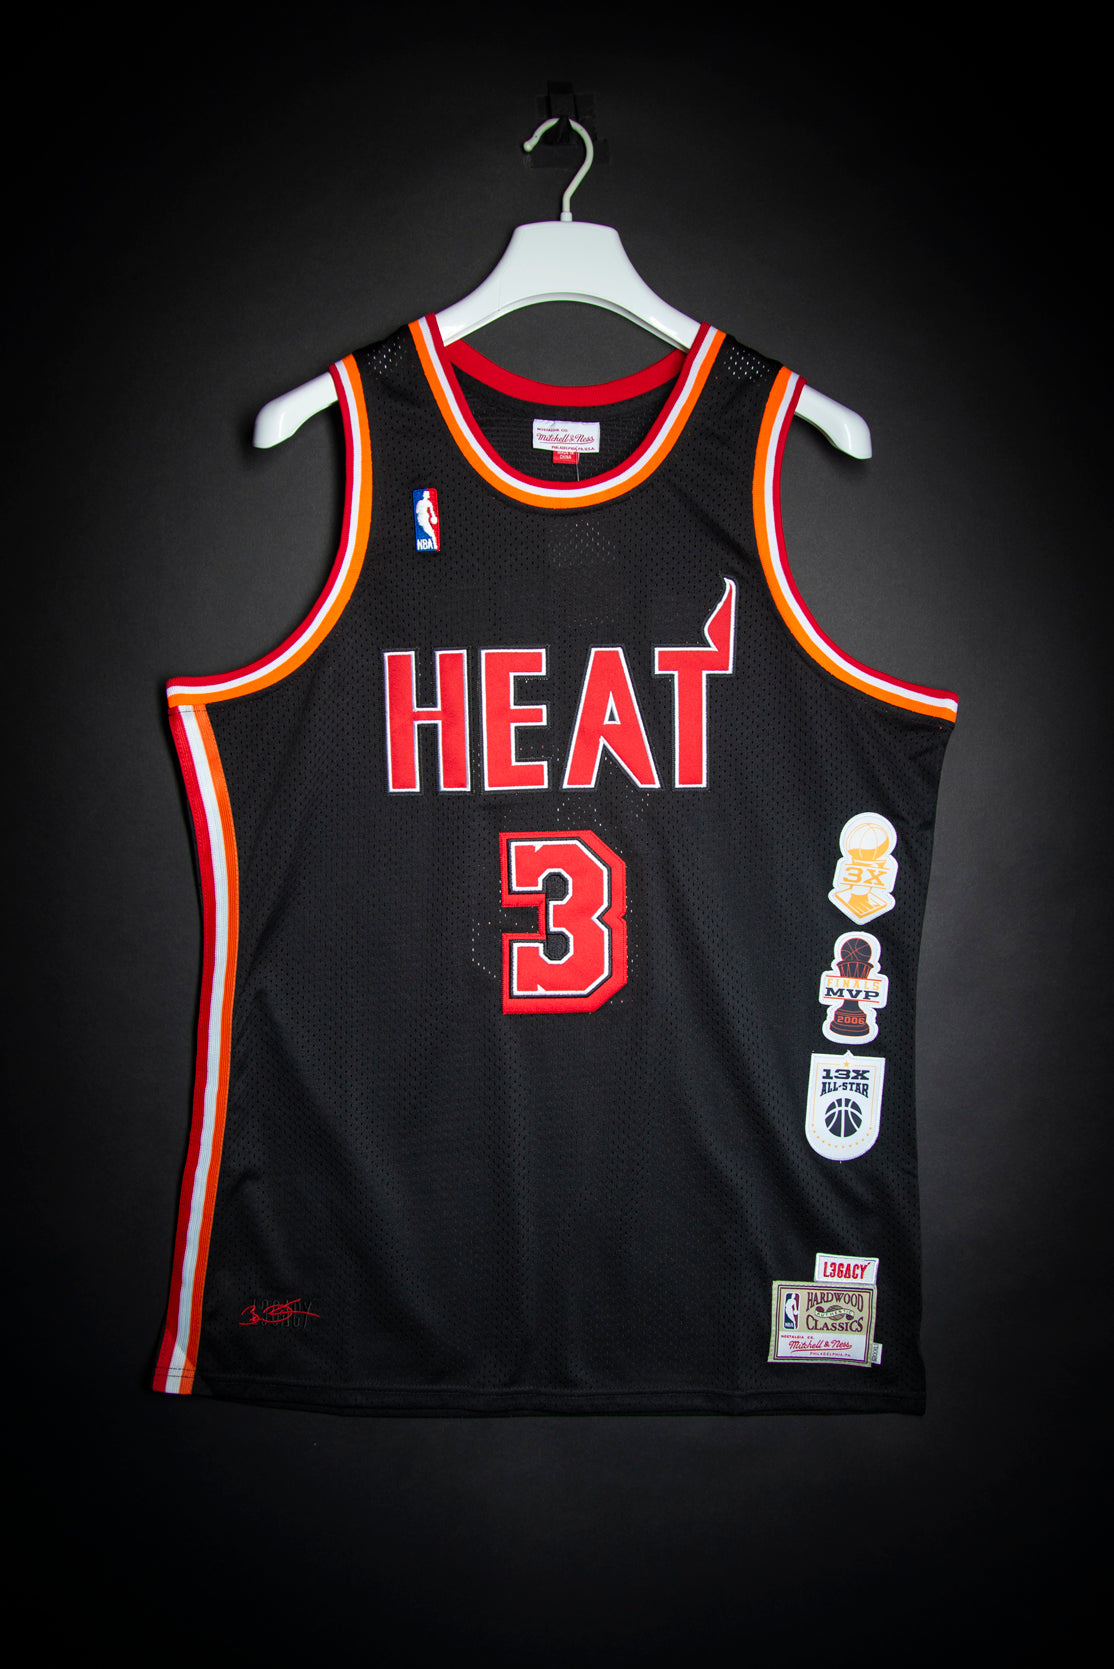 Dwyane Wade Miami Heat Vice City Authentic Jersey - Rare